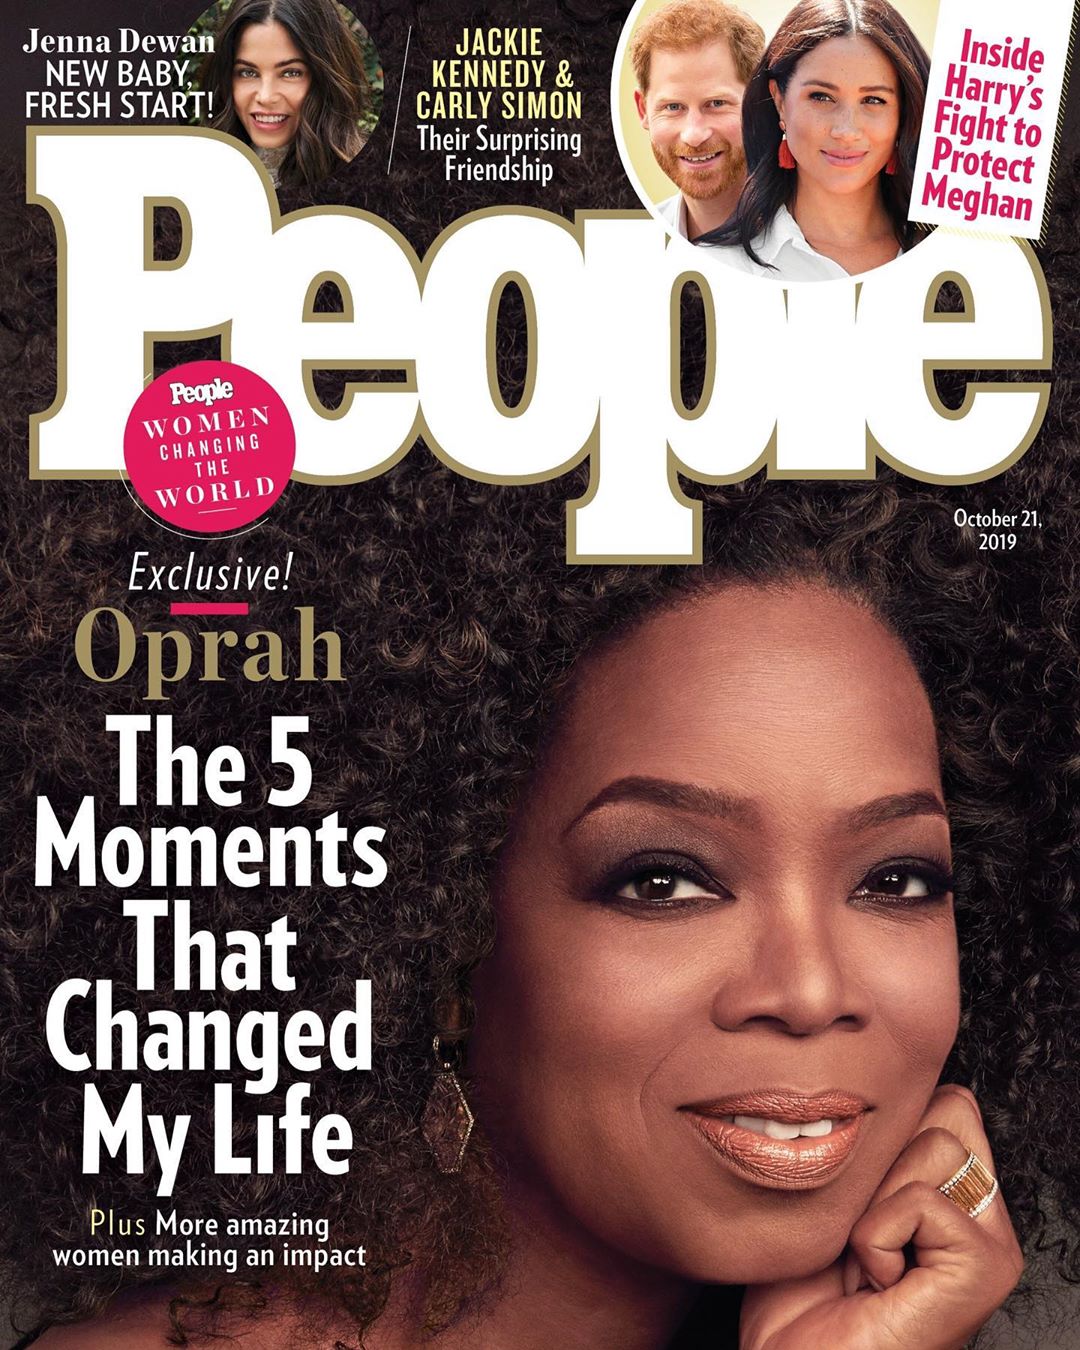 Oprah Winfrey Talks About Not Getting Married or having Kids